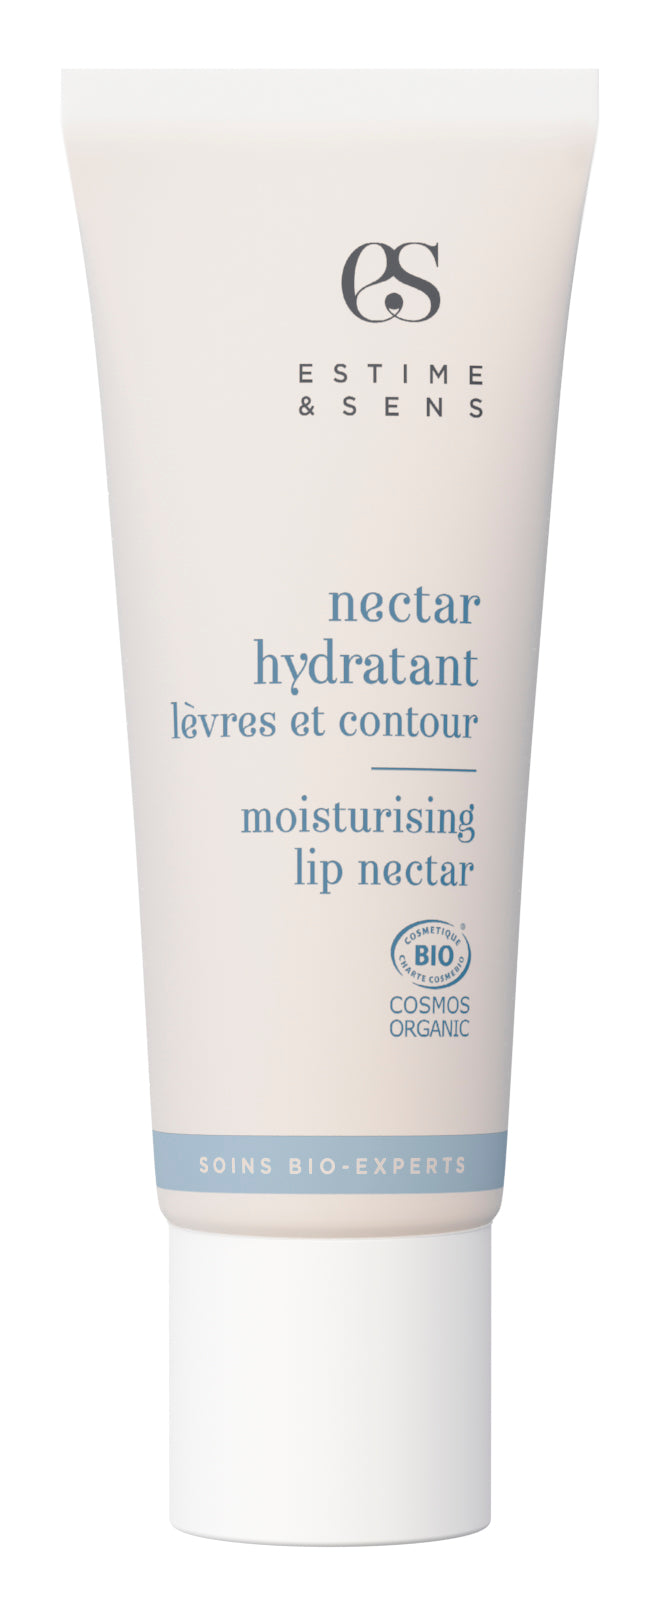 Nectar hydratant lèvres